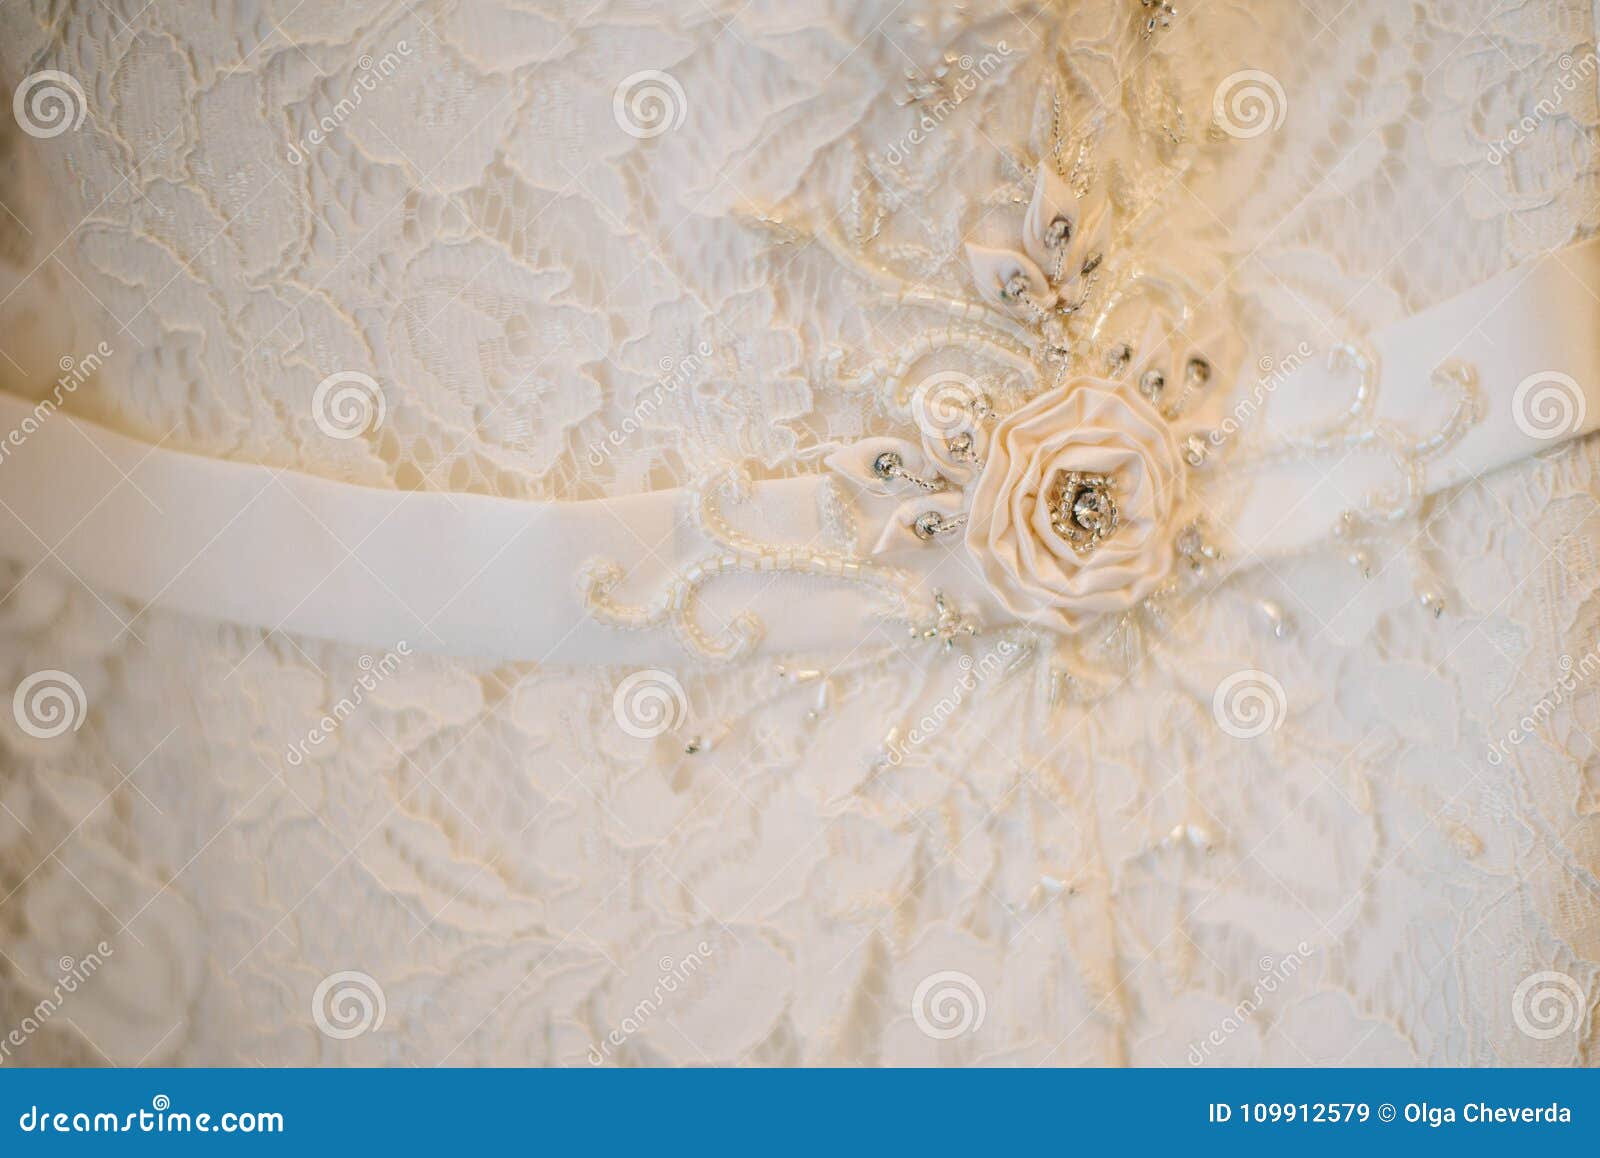 Beautiful White Ornament on a Bridal Wedding Dress Stock Image - Image ...